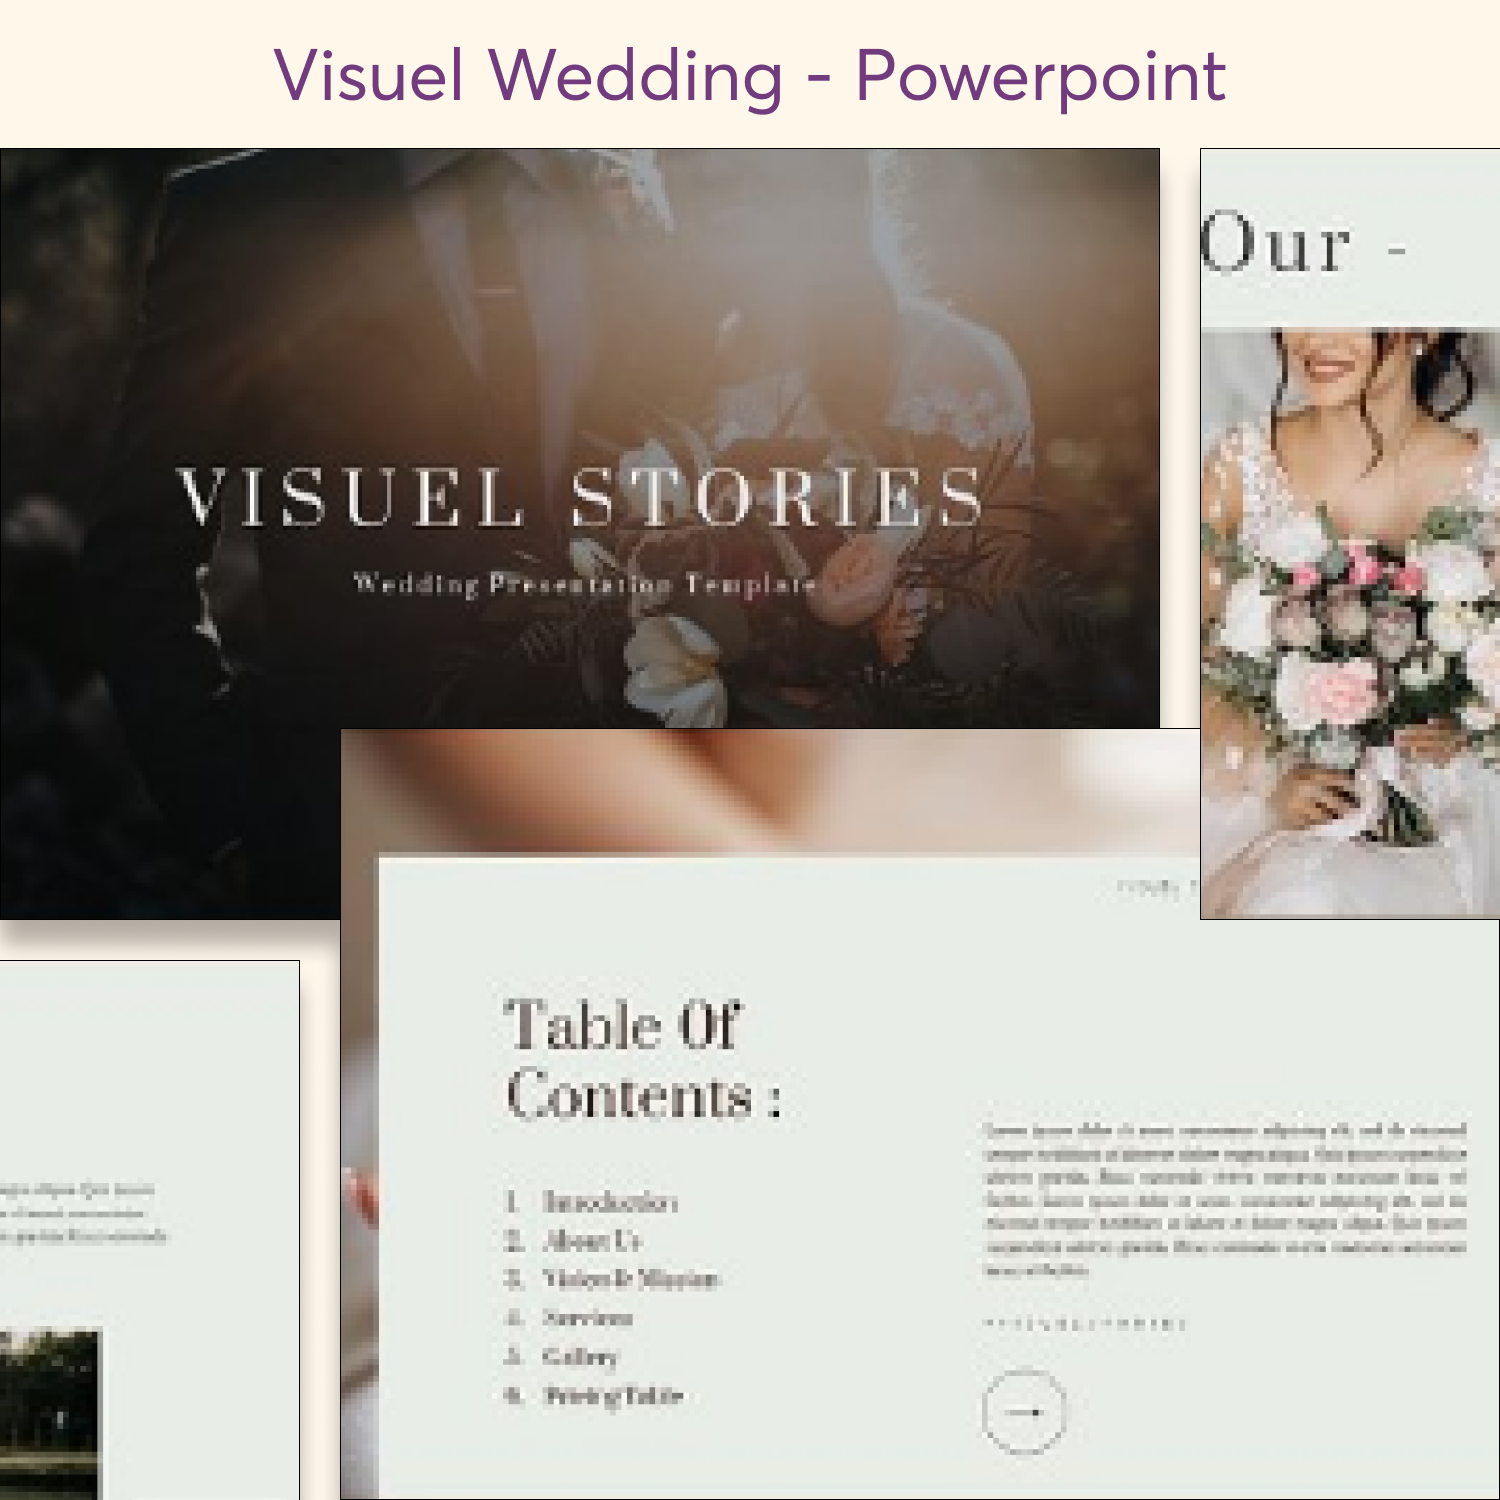 Visuel Wedding - Powerpoint cover.